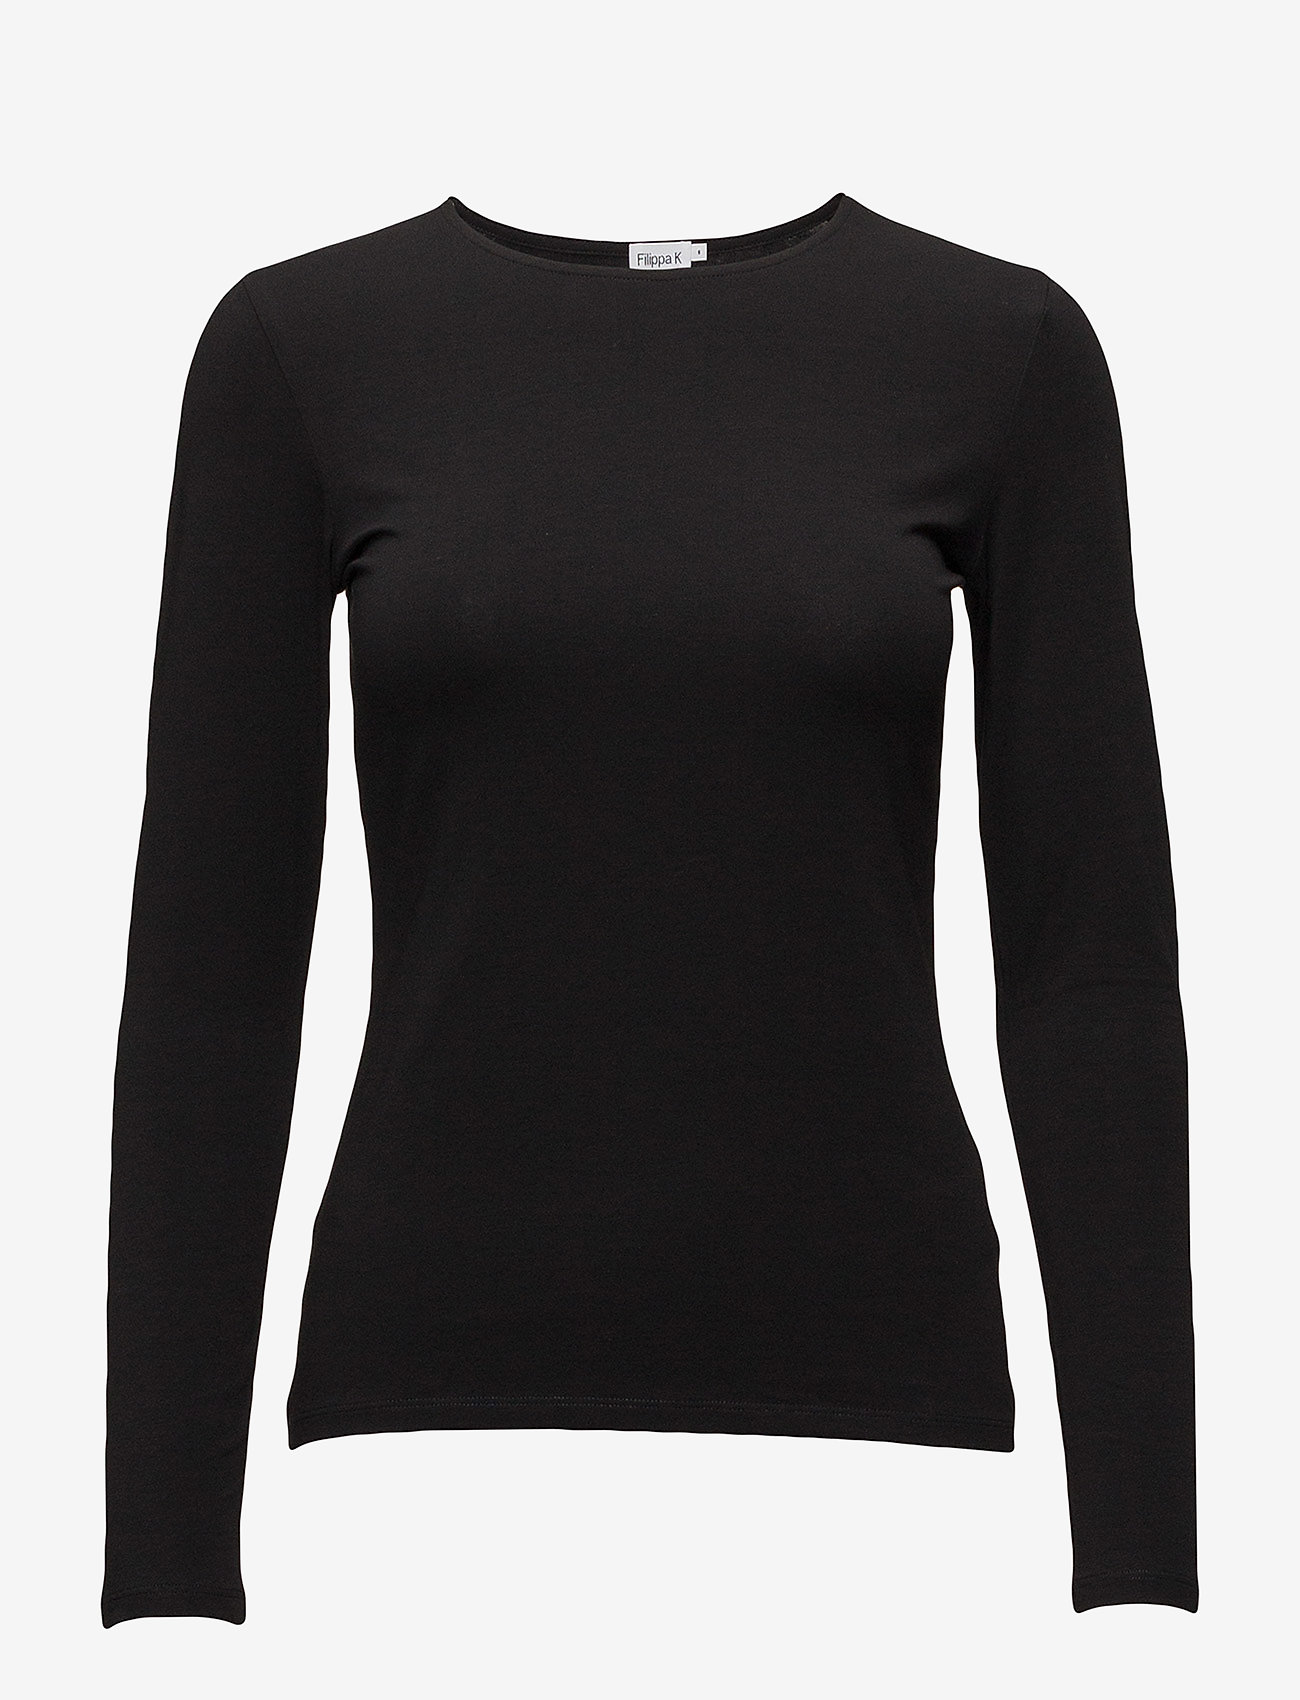 Filippa K Cotton Stretch Long Sleeve (Black) - 400 kr | Boozt.com